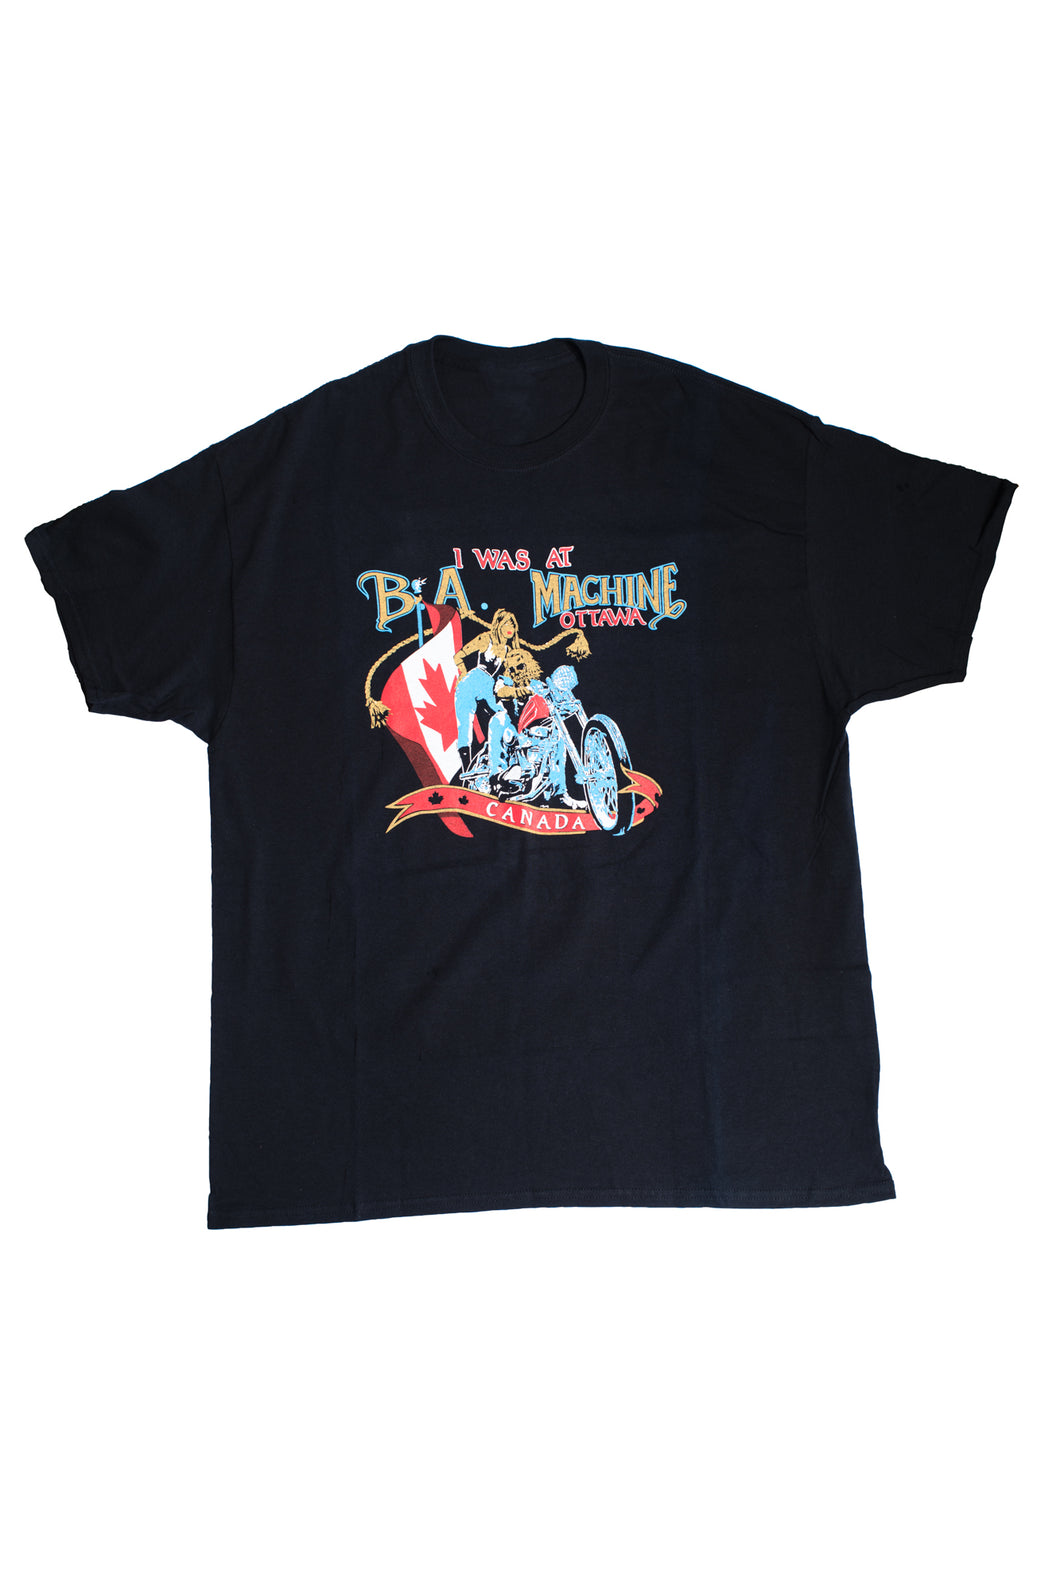 BA Machine Men's  Black Retro T-Shirt